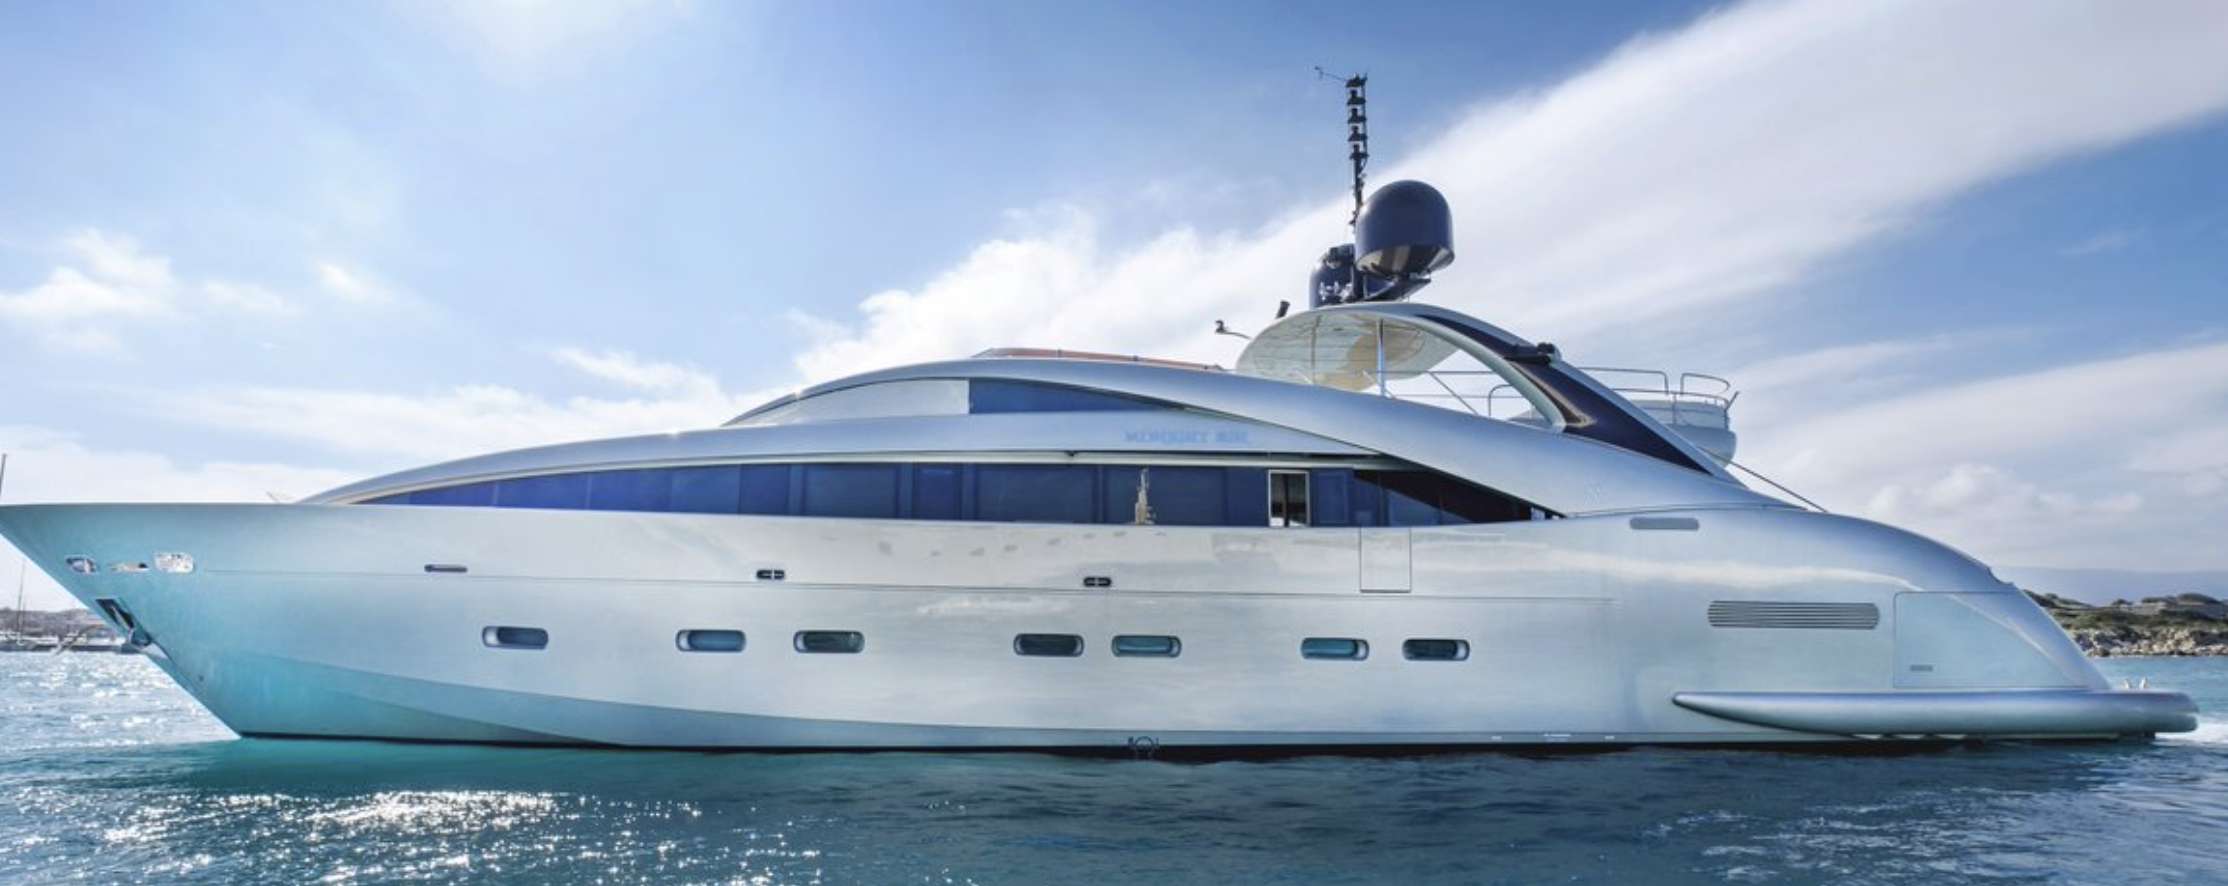 YCM 120 - Motor Boat Charter Balearics & Boat hire in Riviera, Corsica, Sardinia, Spain, Balearics, Caribbean 4